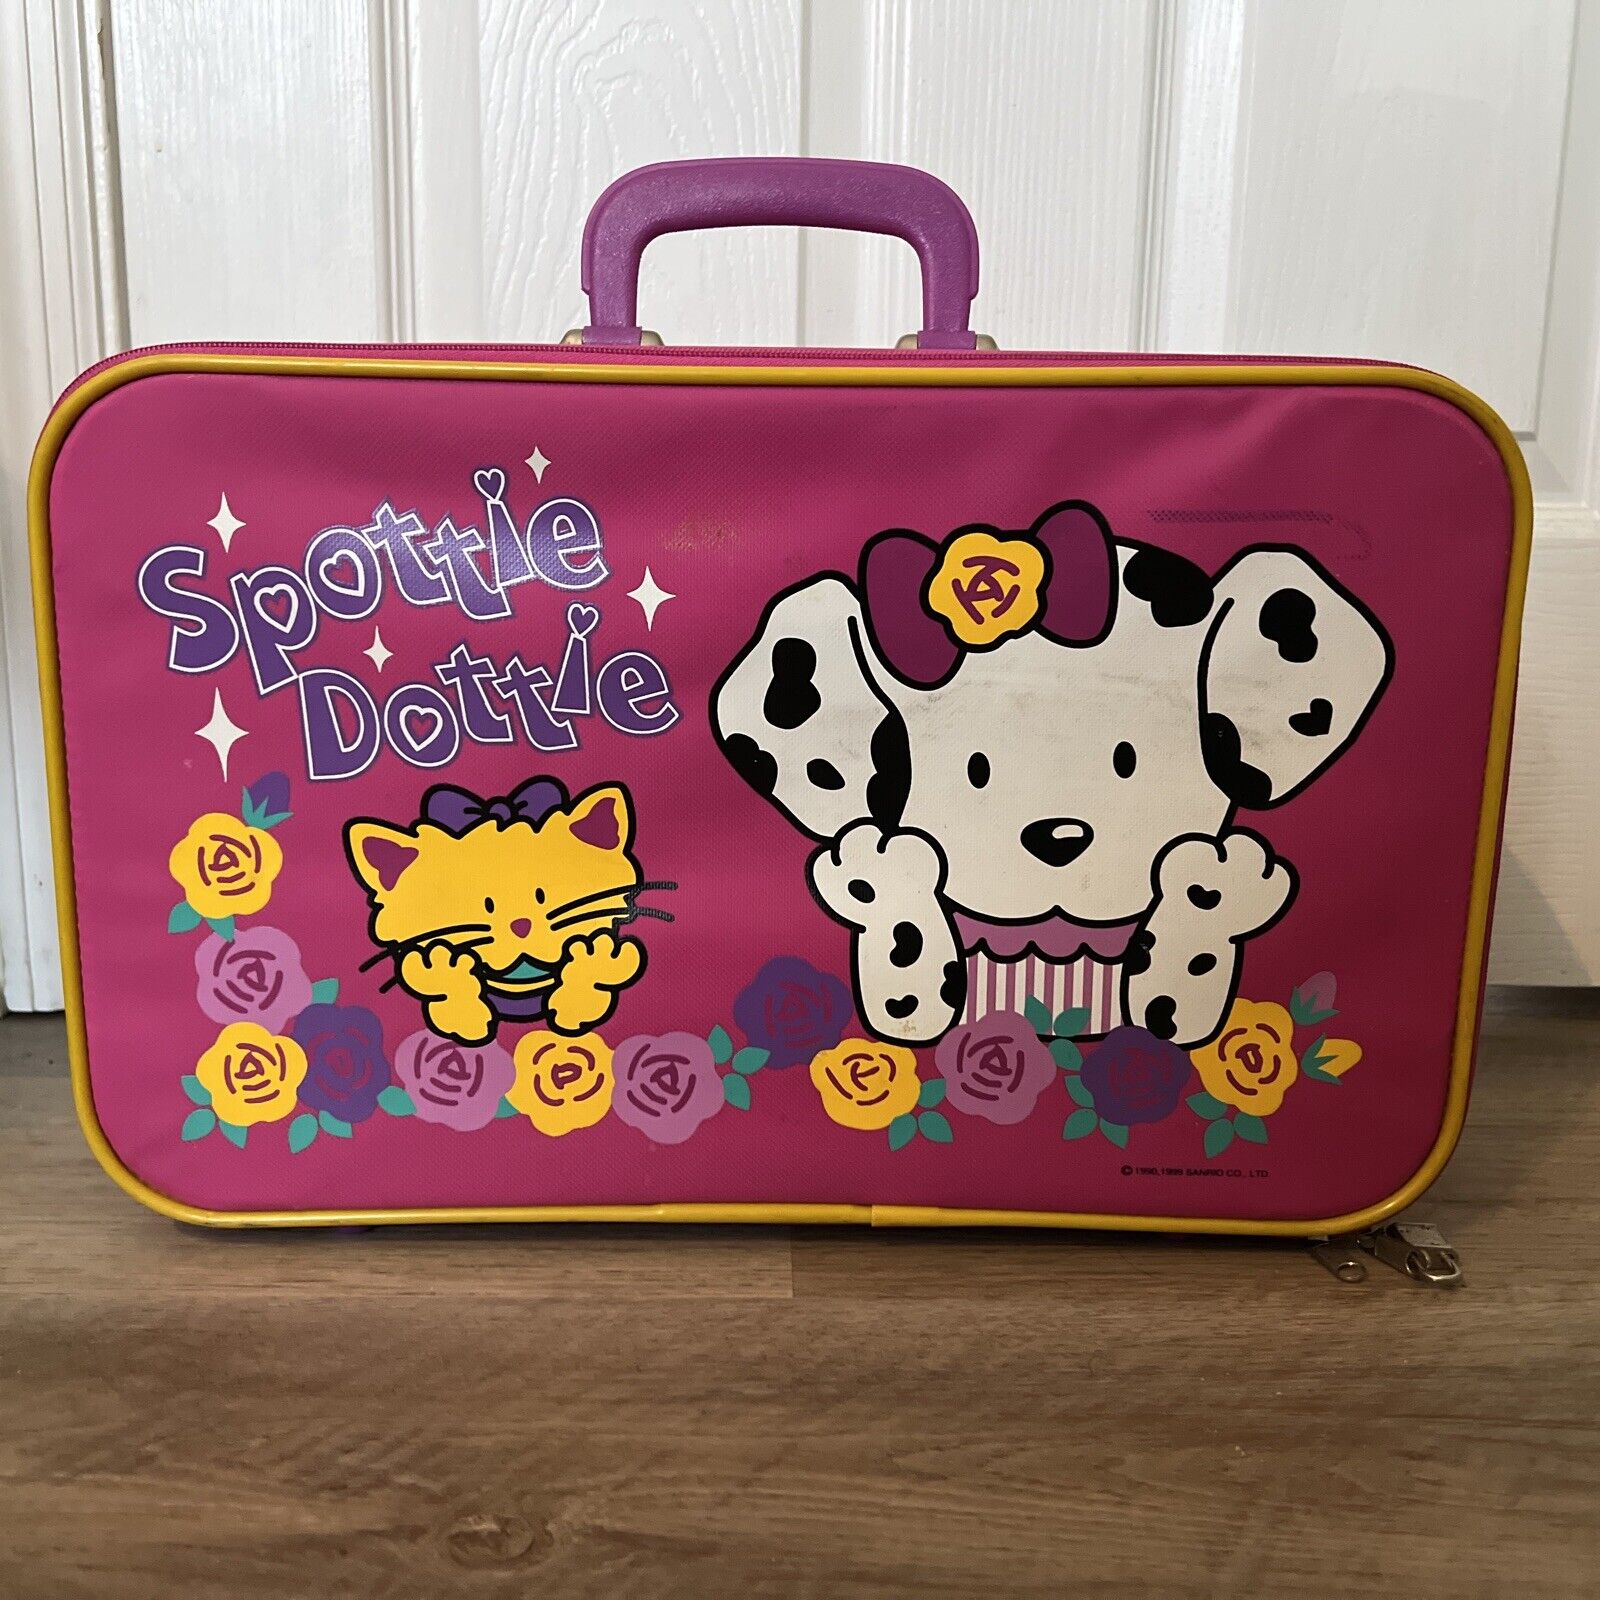 Sanrio Spottie Dottie Suitcase VTG Roses Floral Dalmatian Cat Pink Luggage